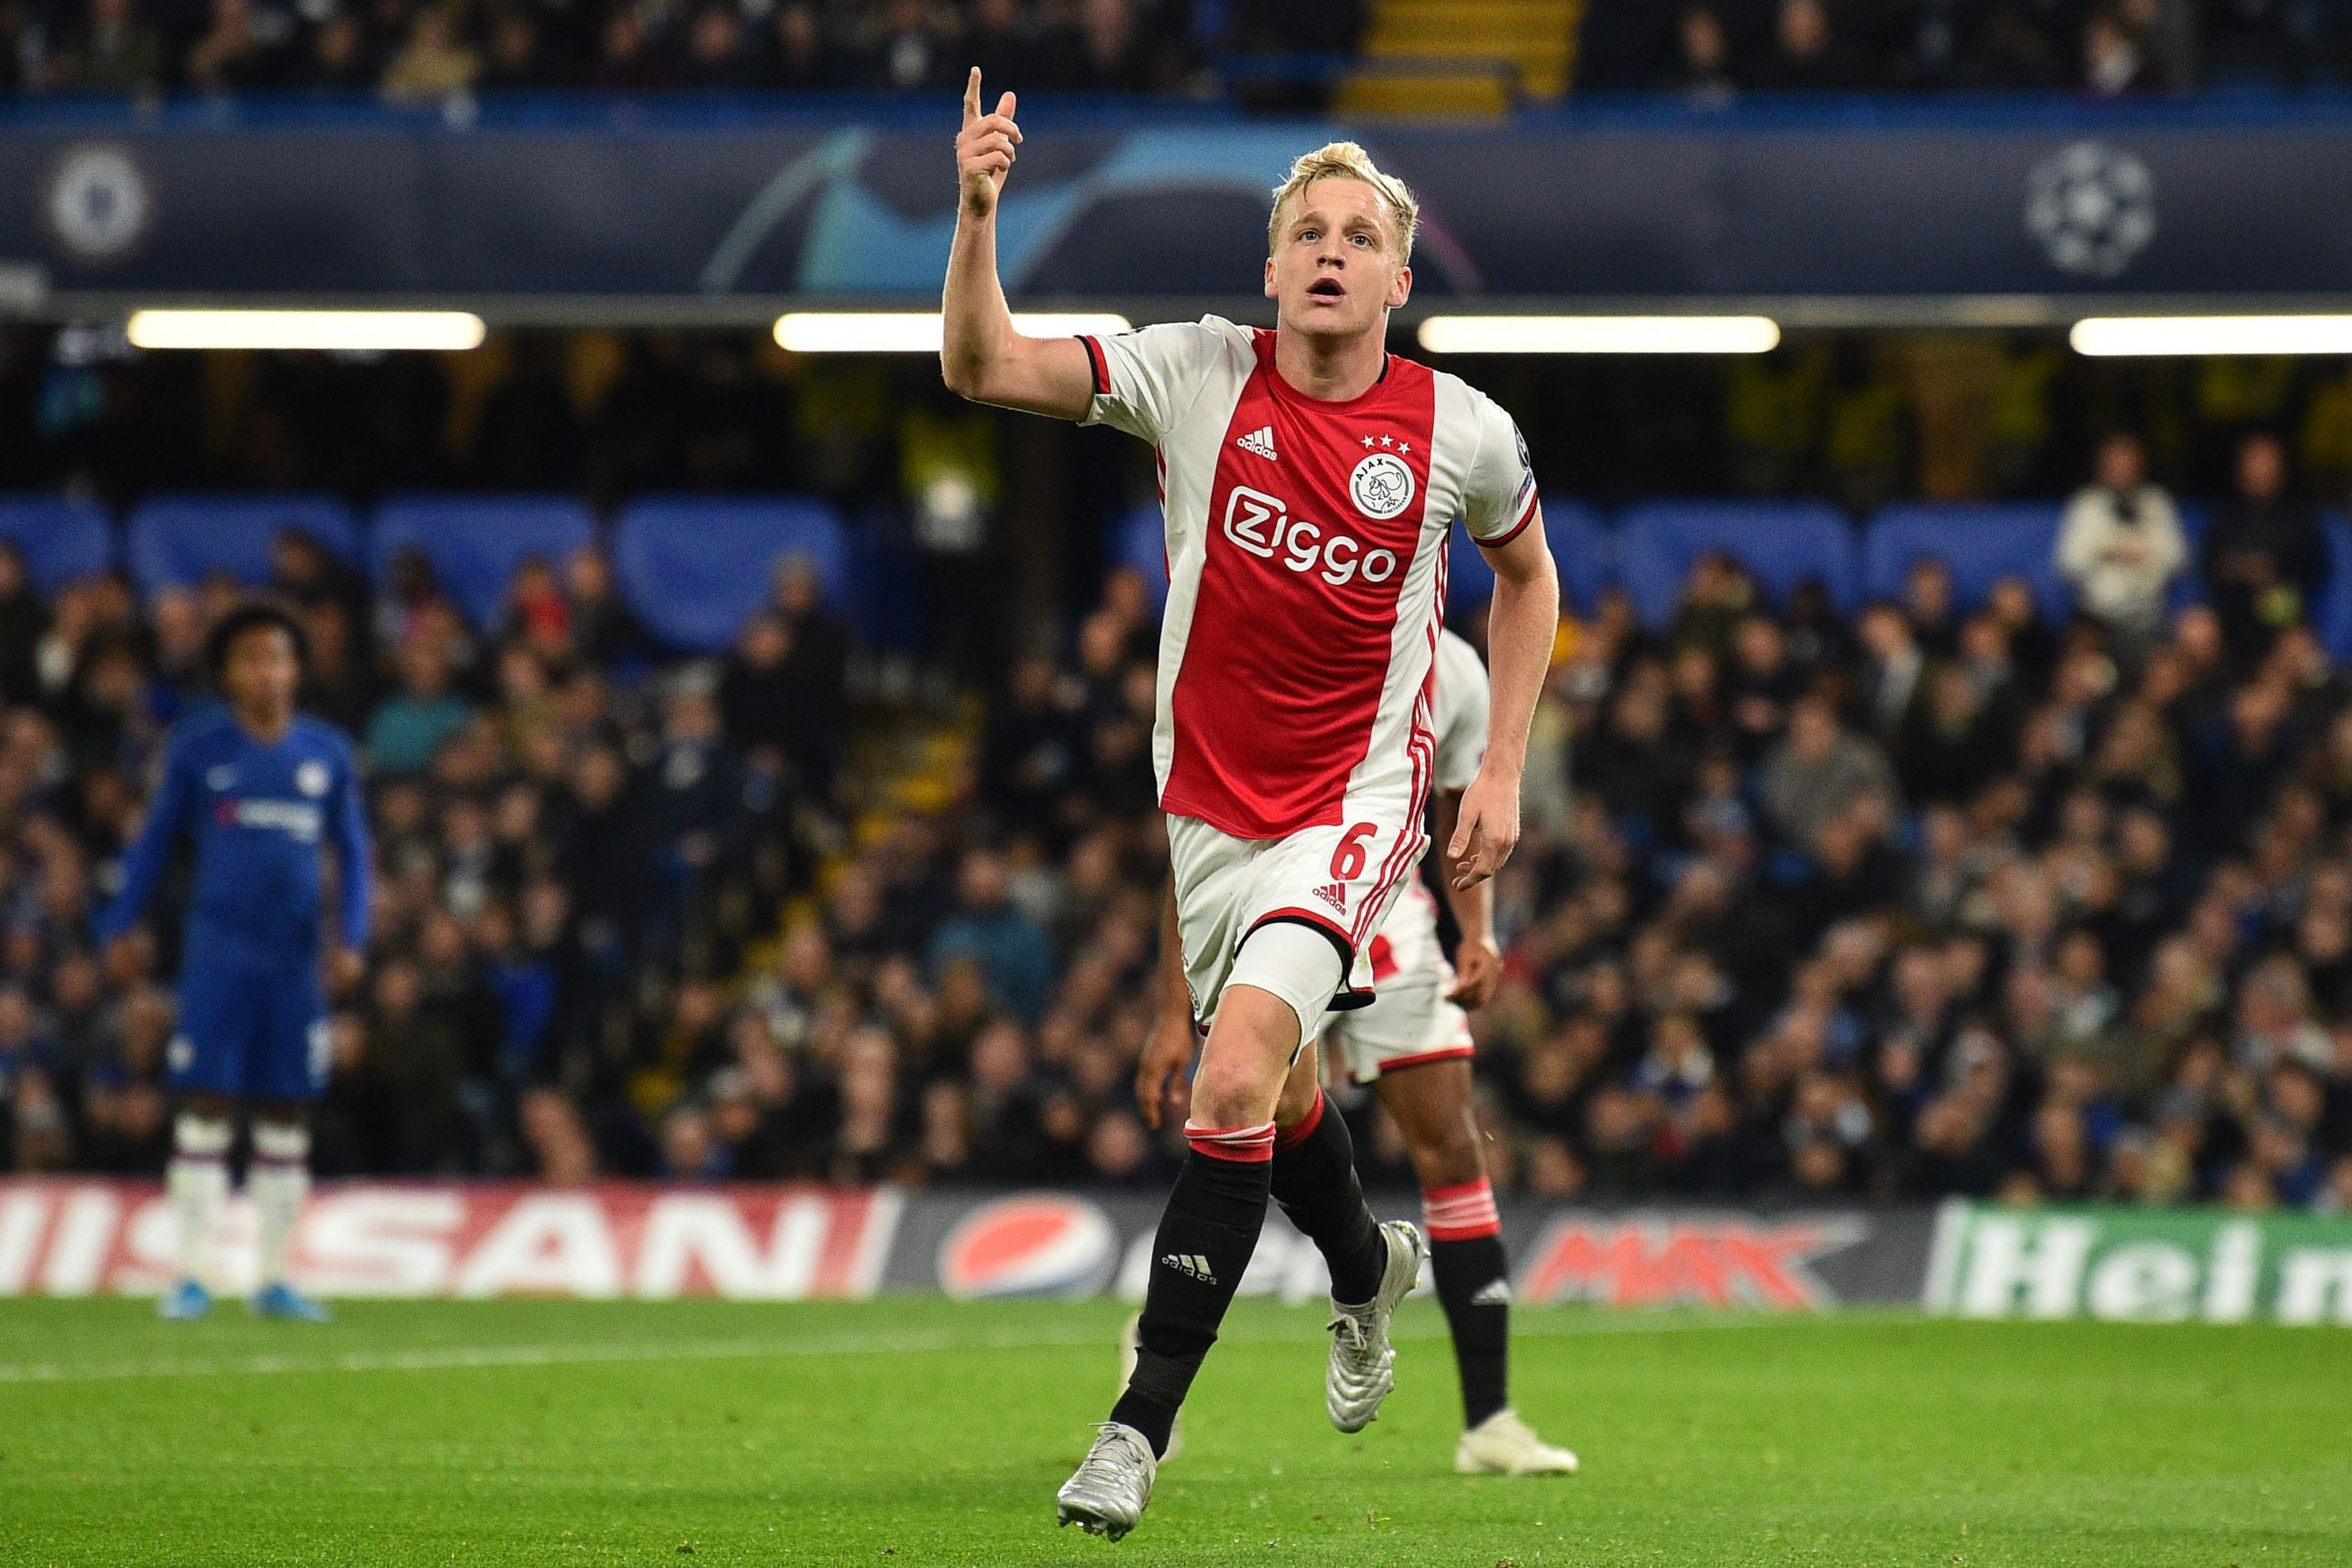 Donny van de Beek celebrates after scoring against Chelsea